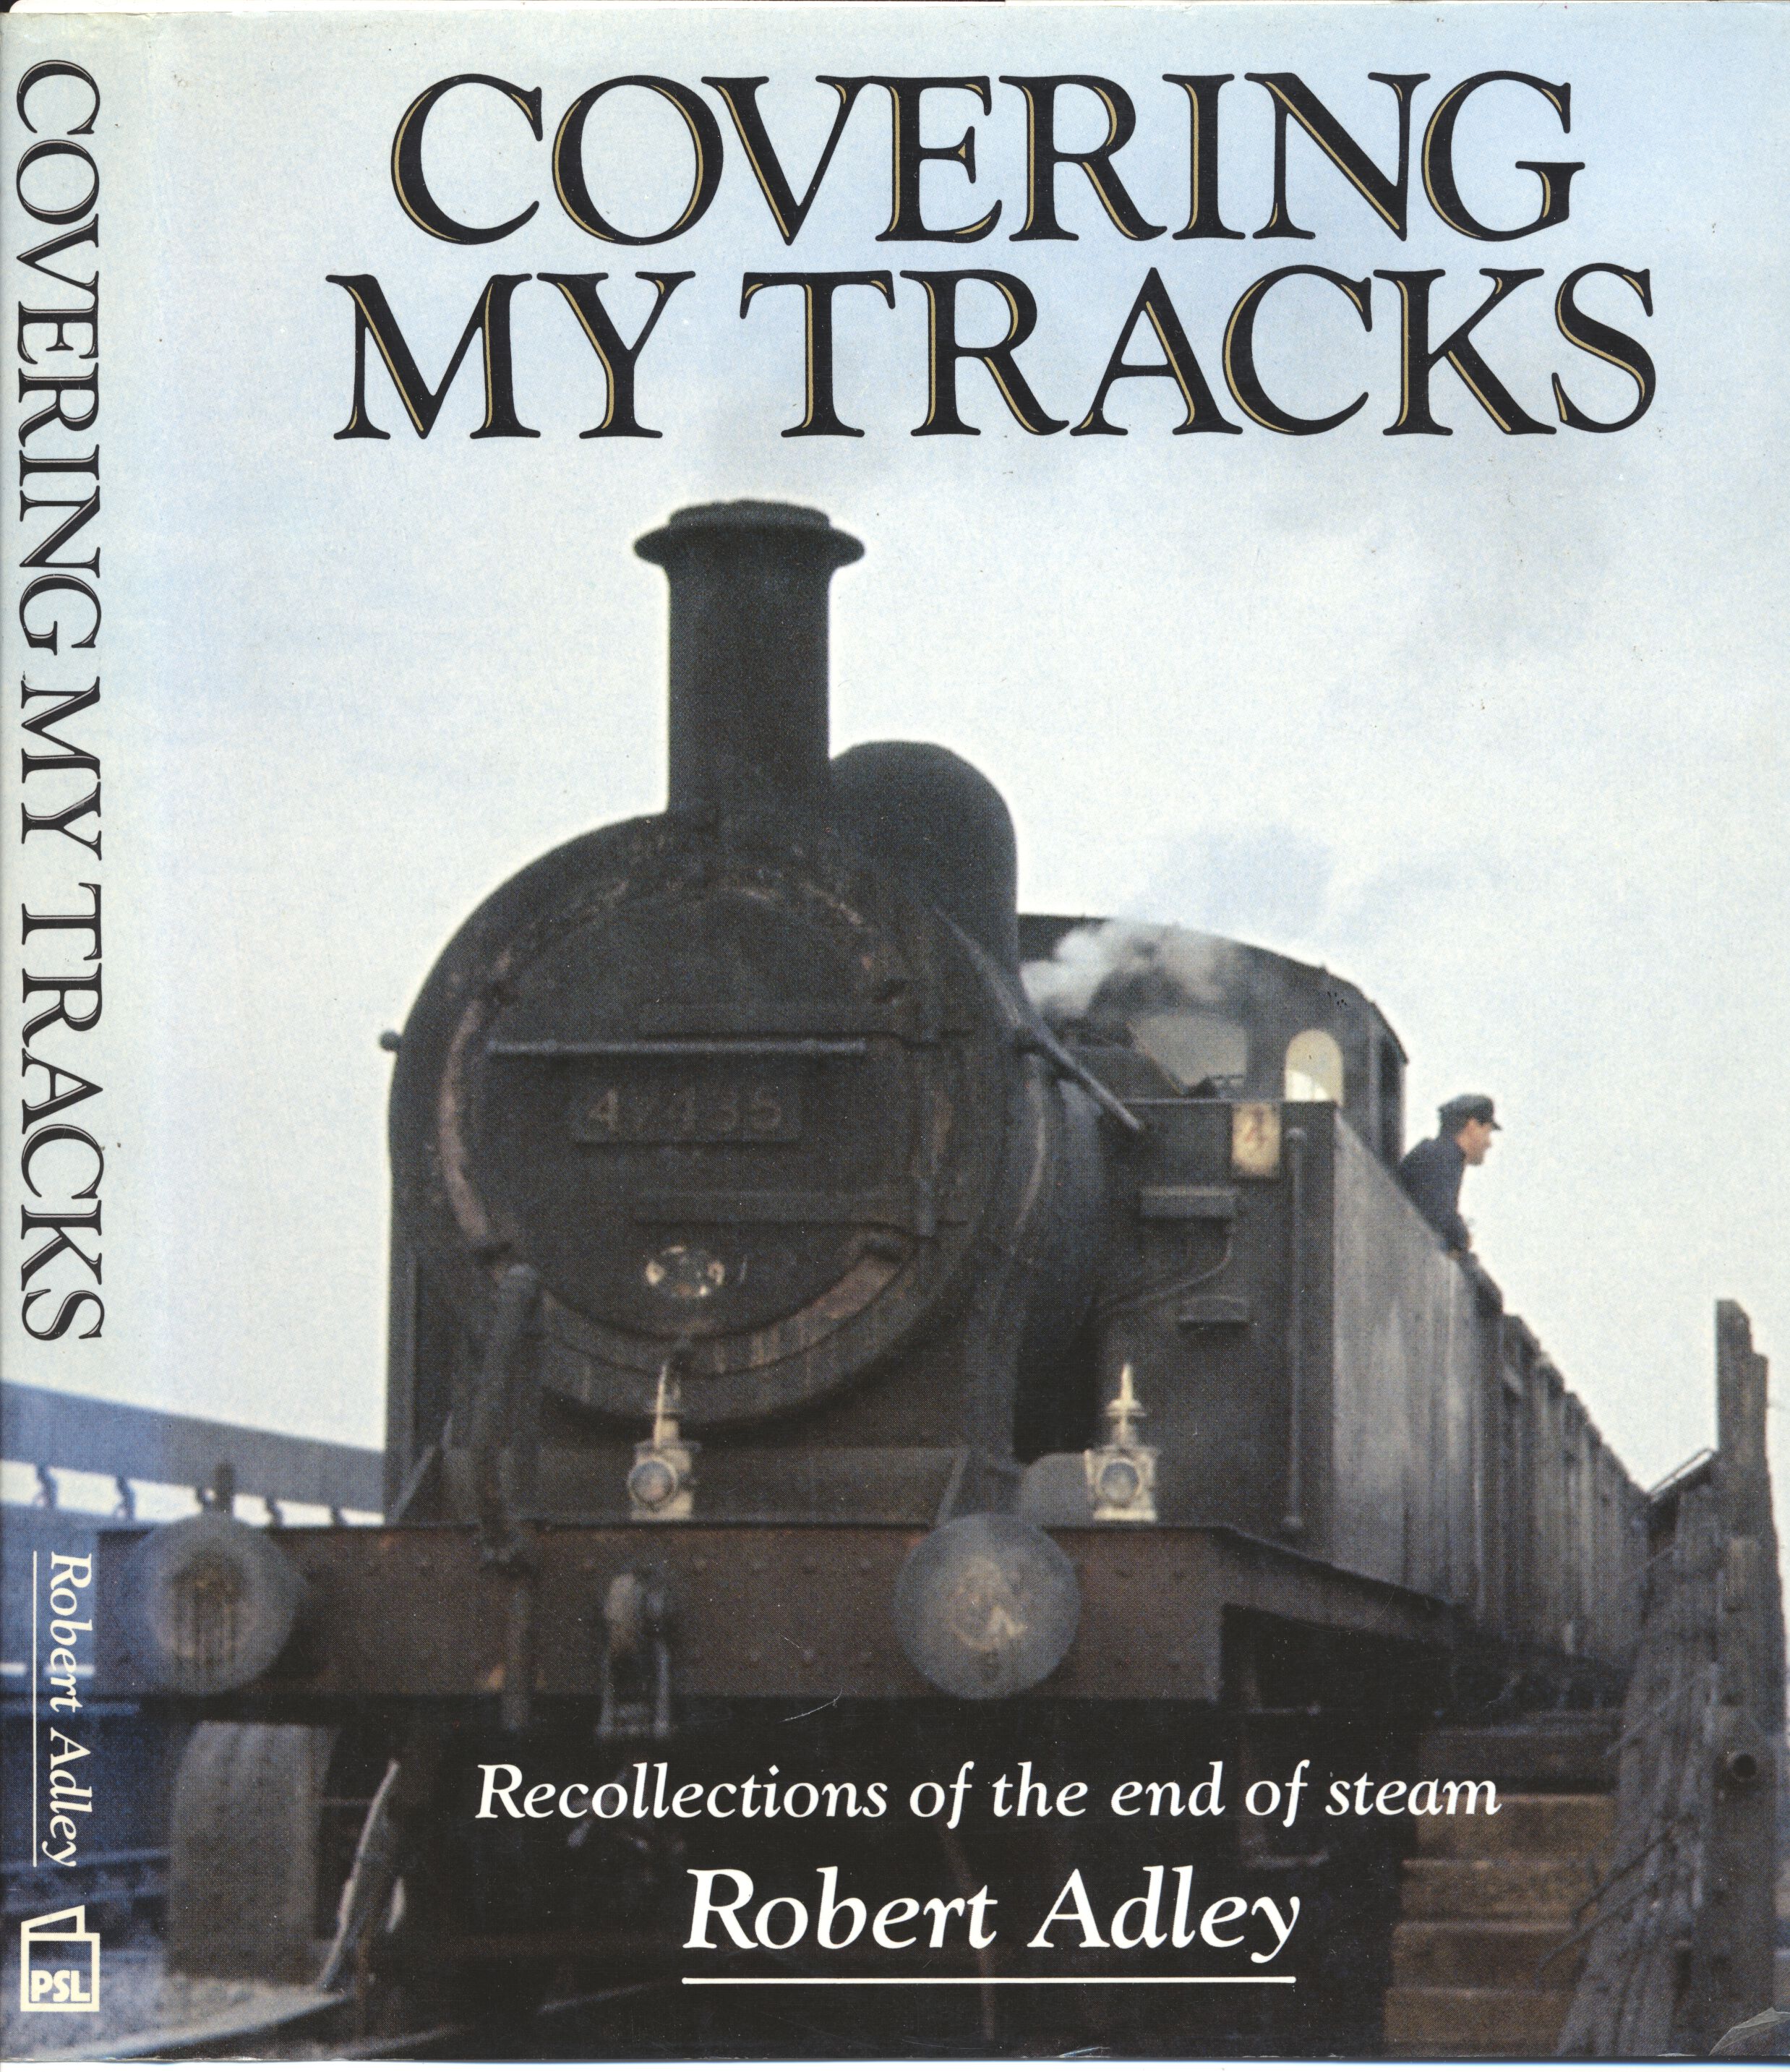 Covering My Tracks - Robert Adley